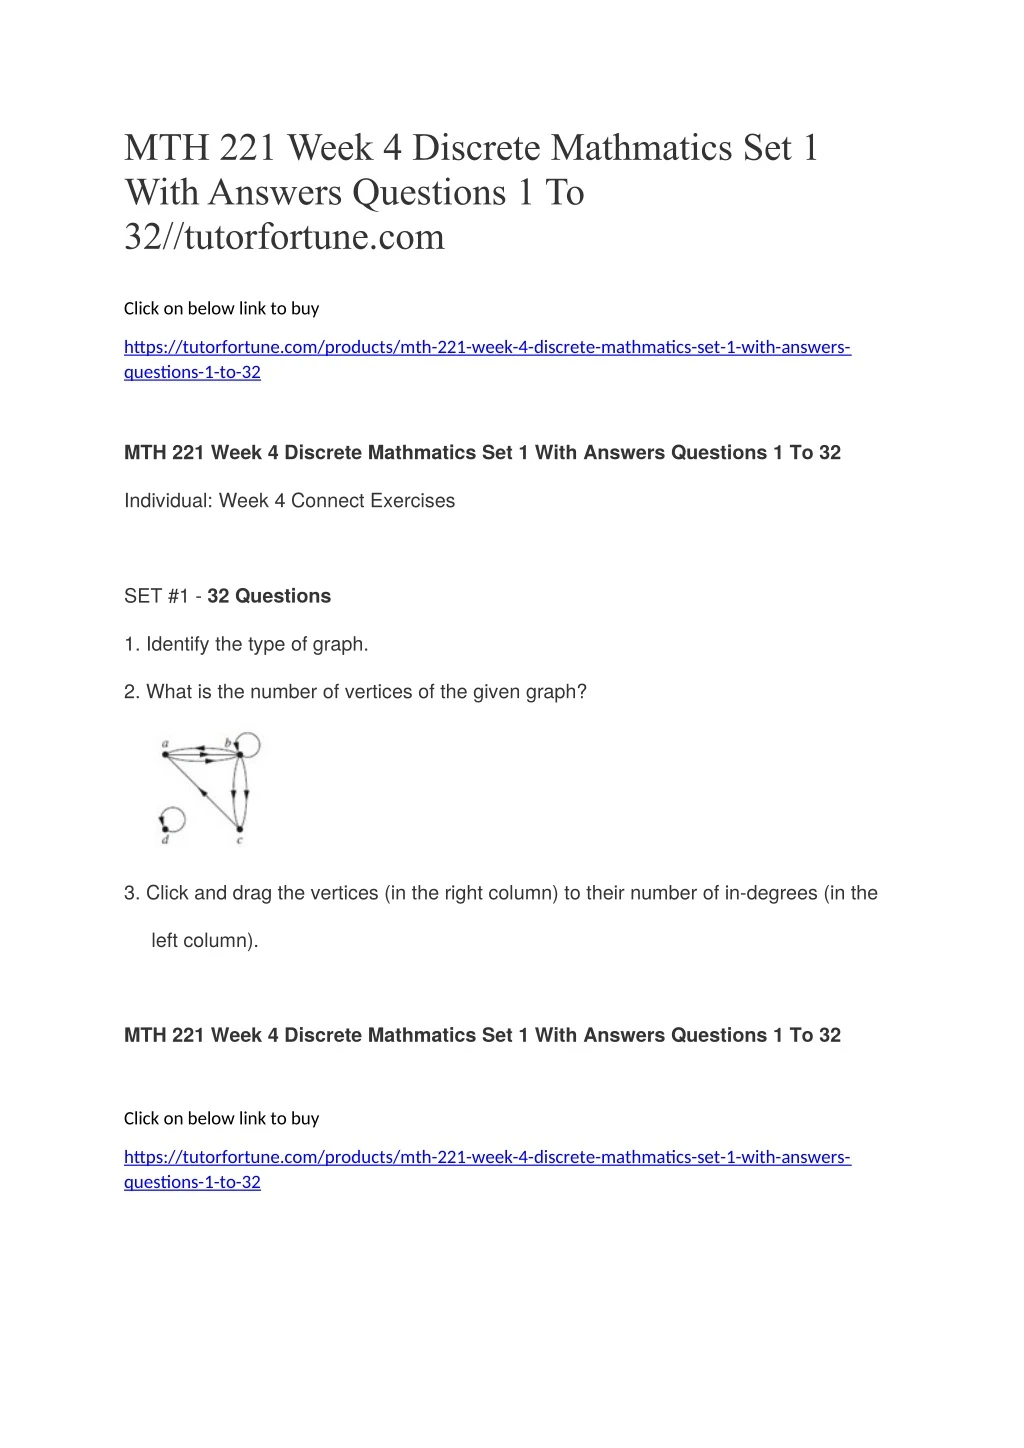 mth 221 week 4 discrete mathmatics set 1 with